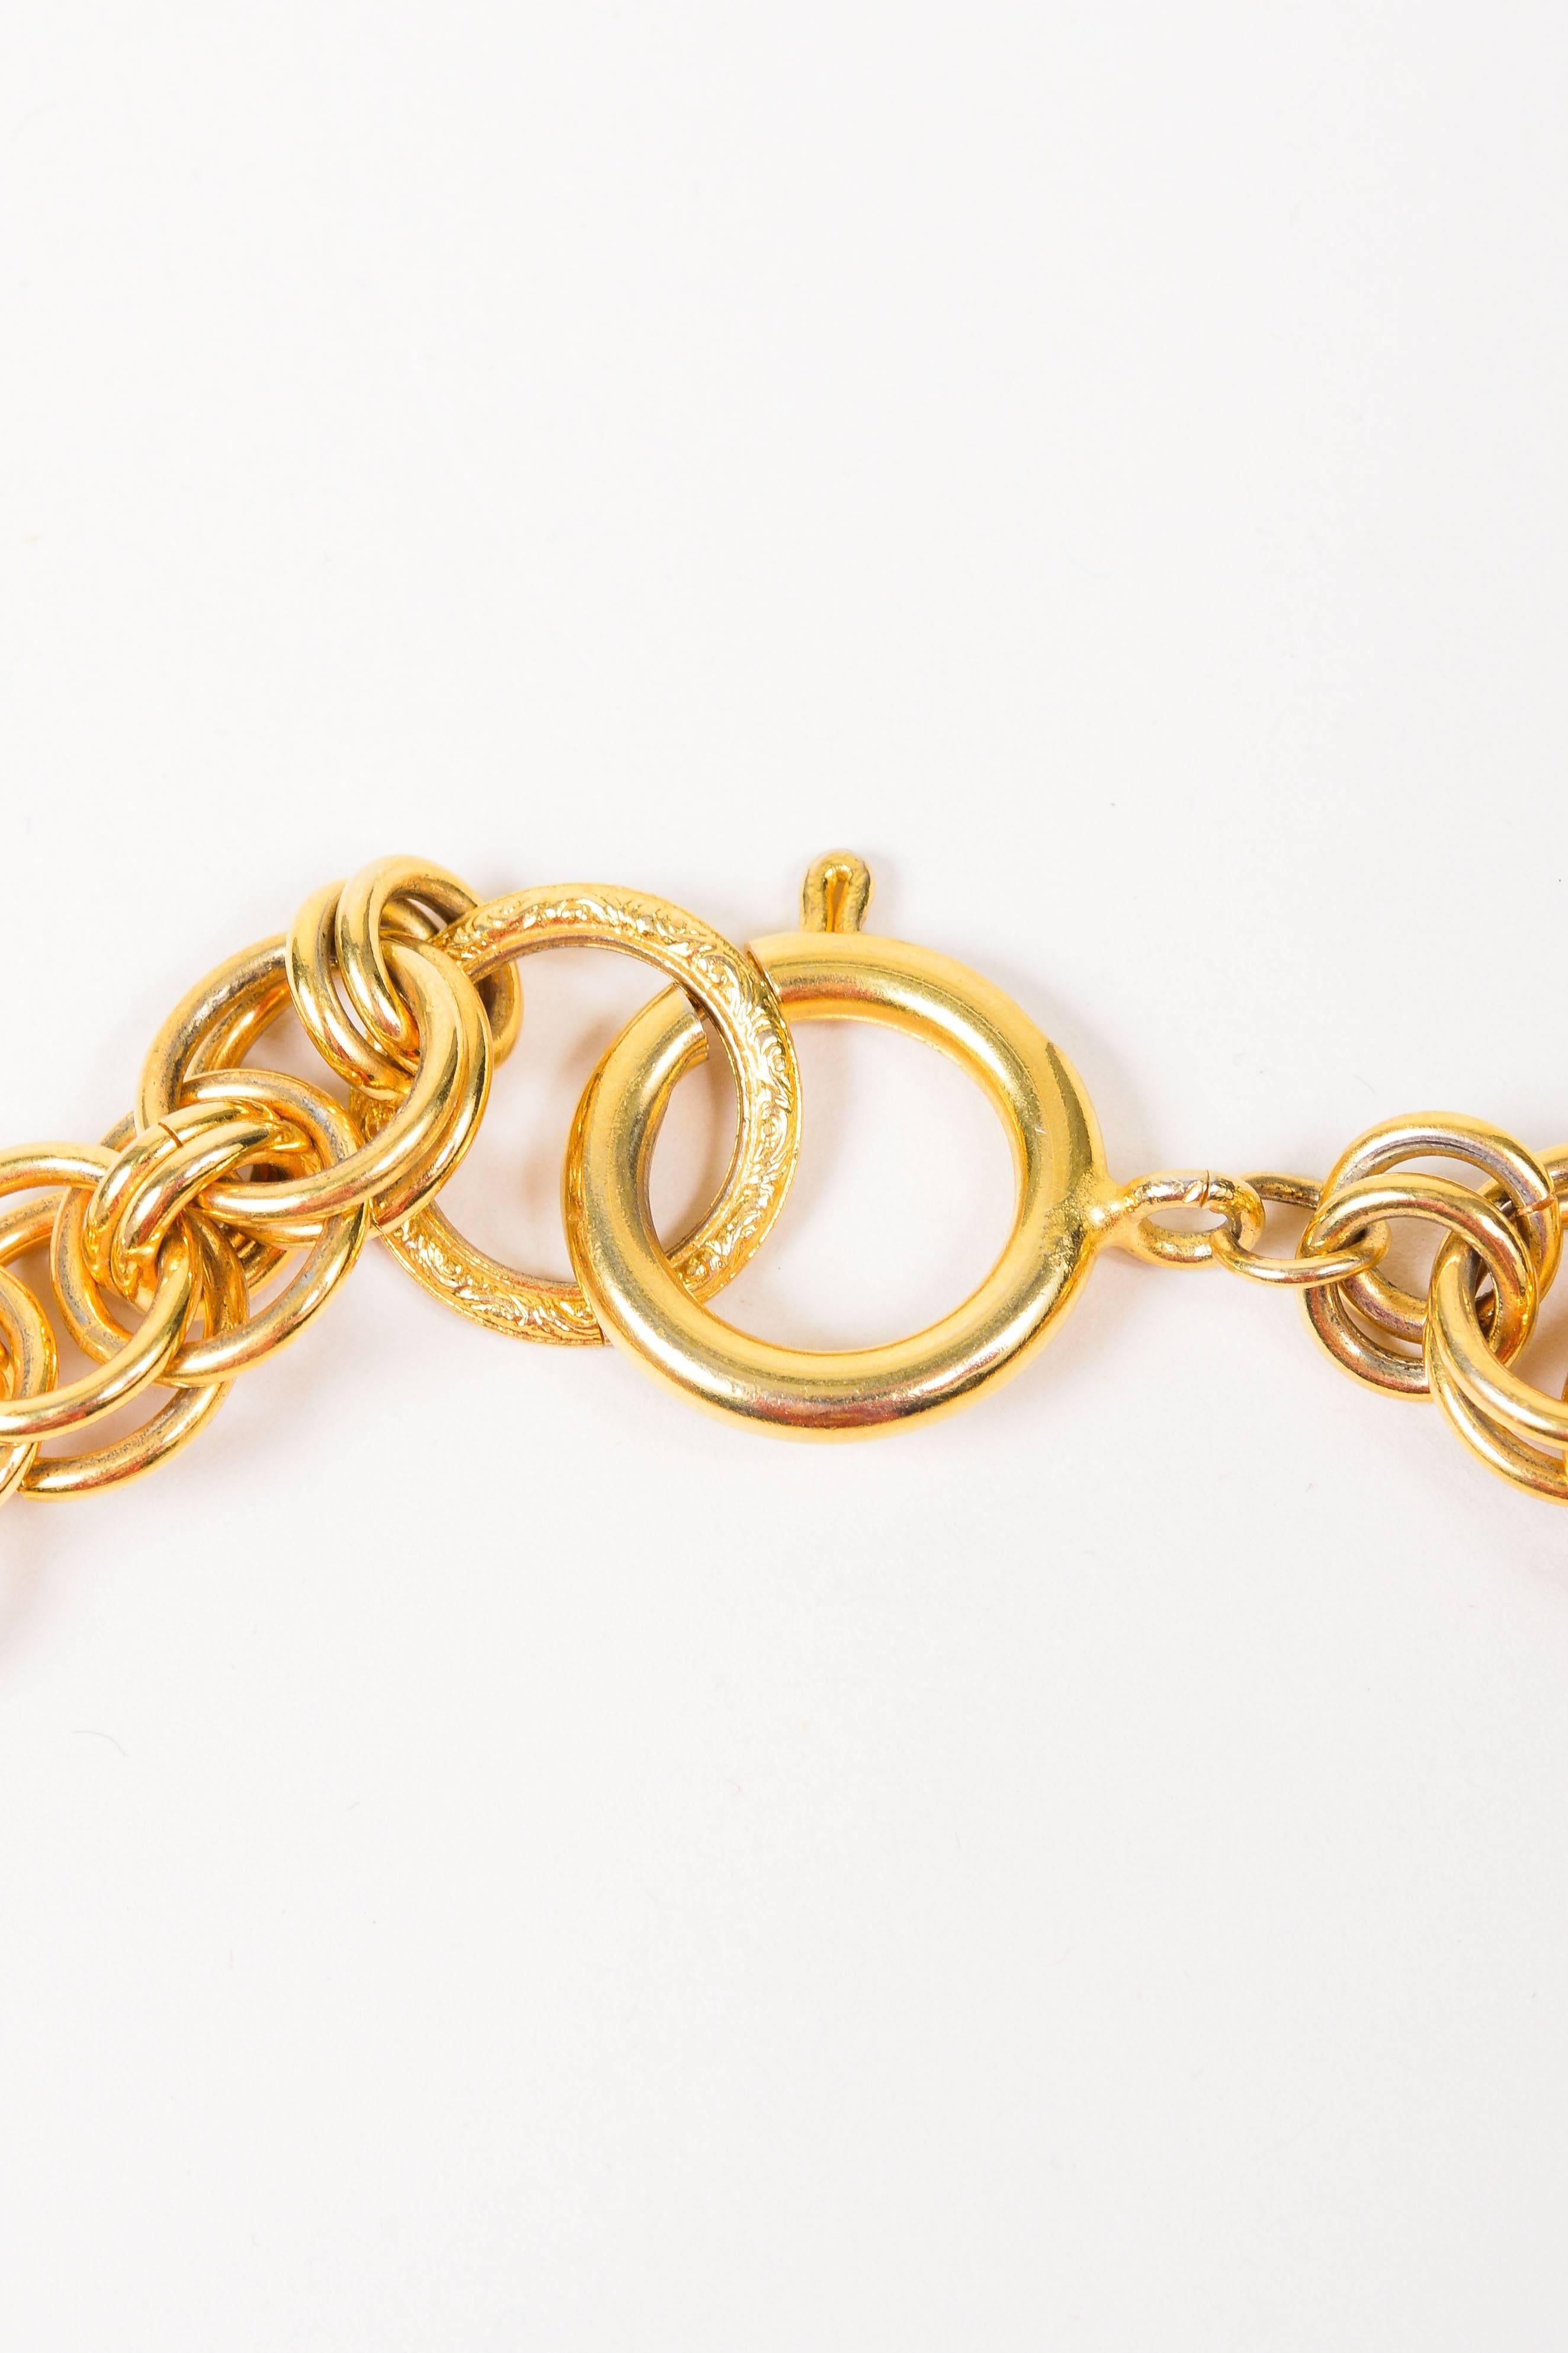 Vintage Chanel Gold Tone 'Coco' Figure Removable Pendant Charm Chain Necklace 1